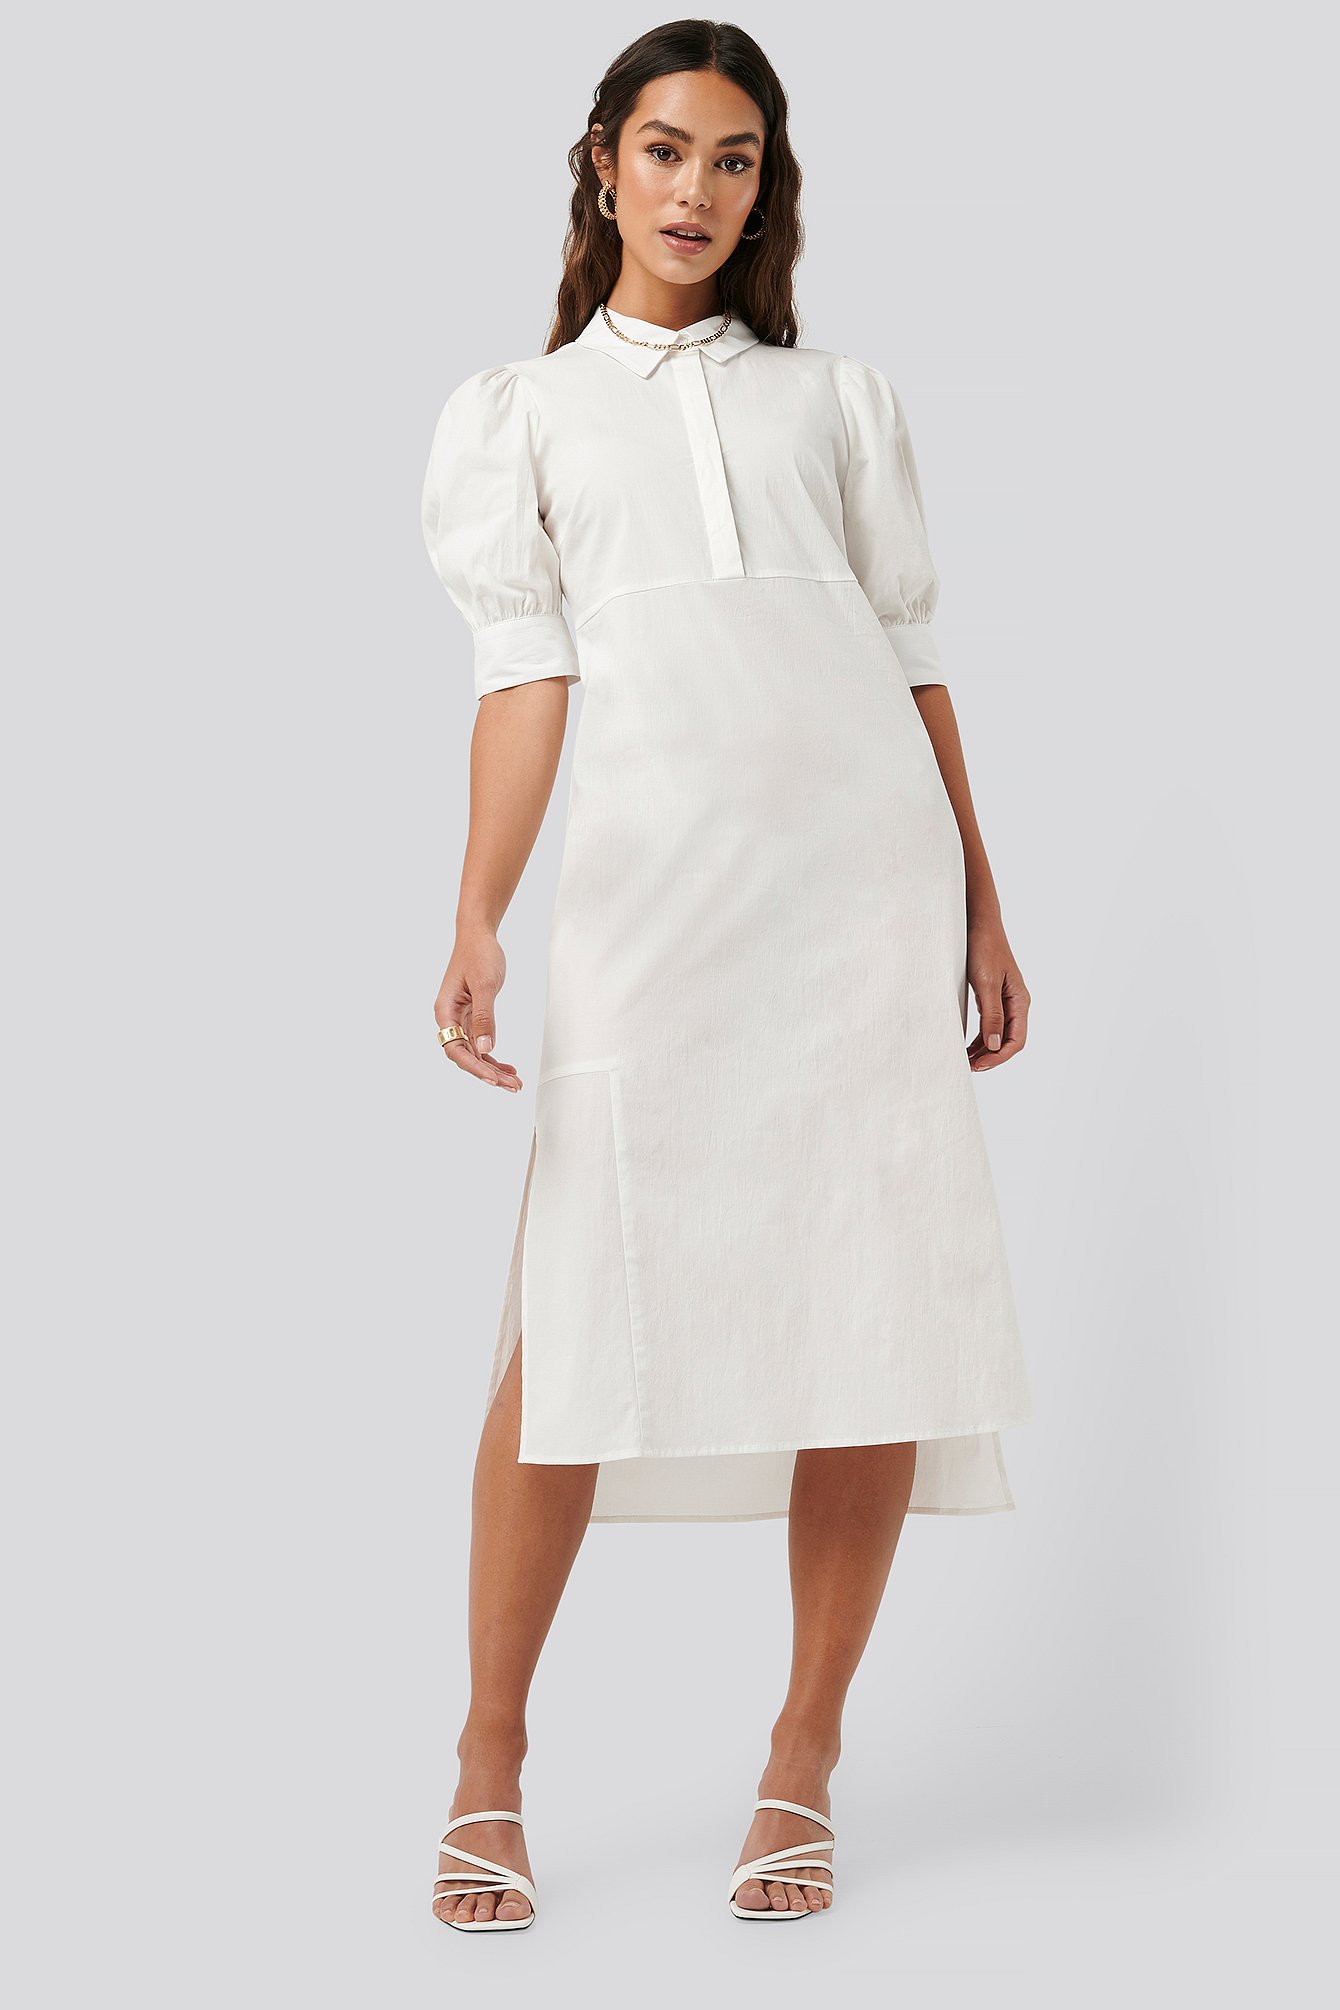 White Puff Sleeve Panel Dress